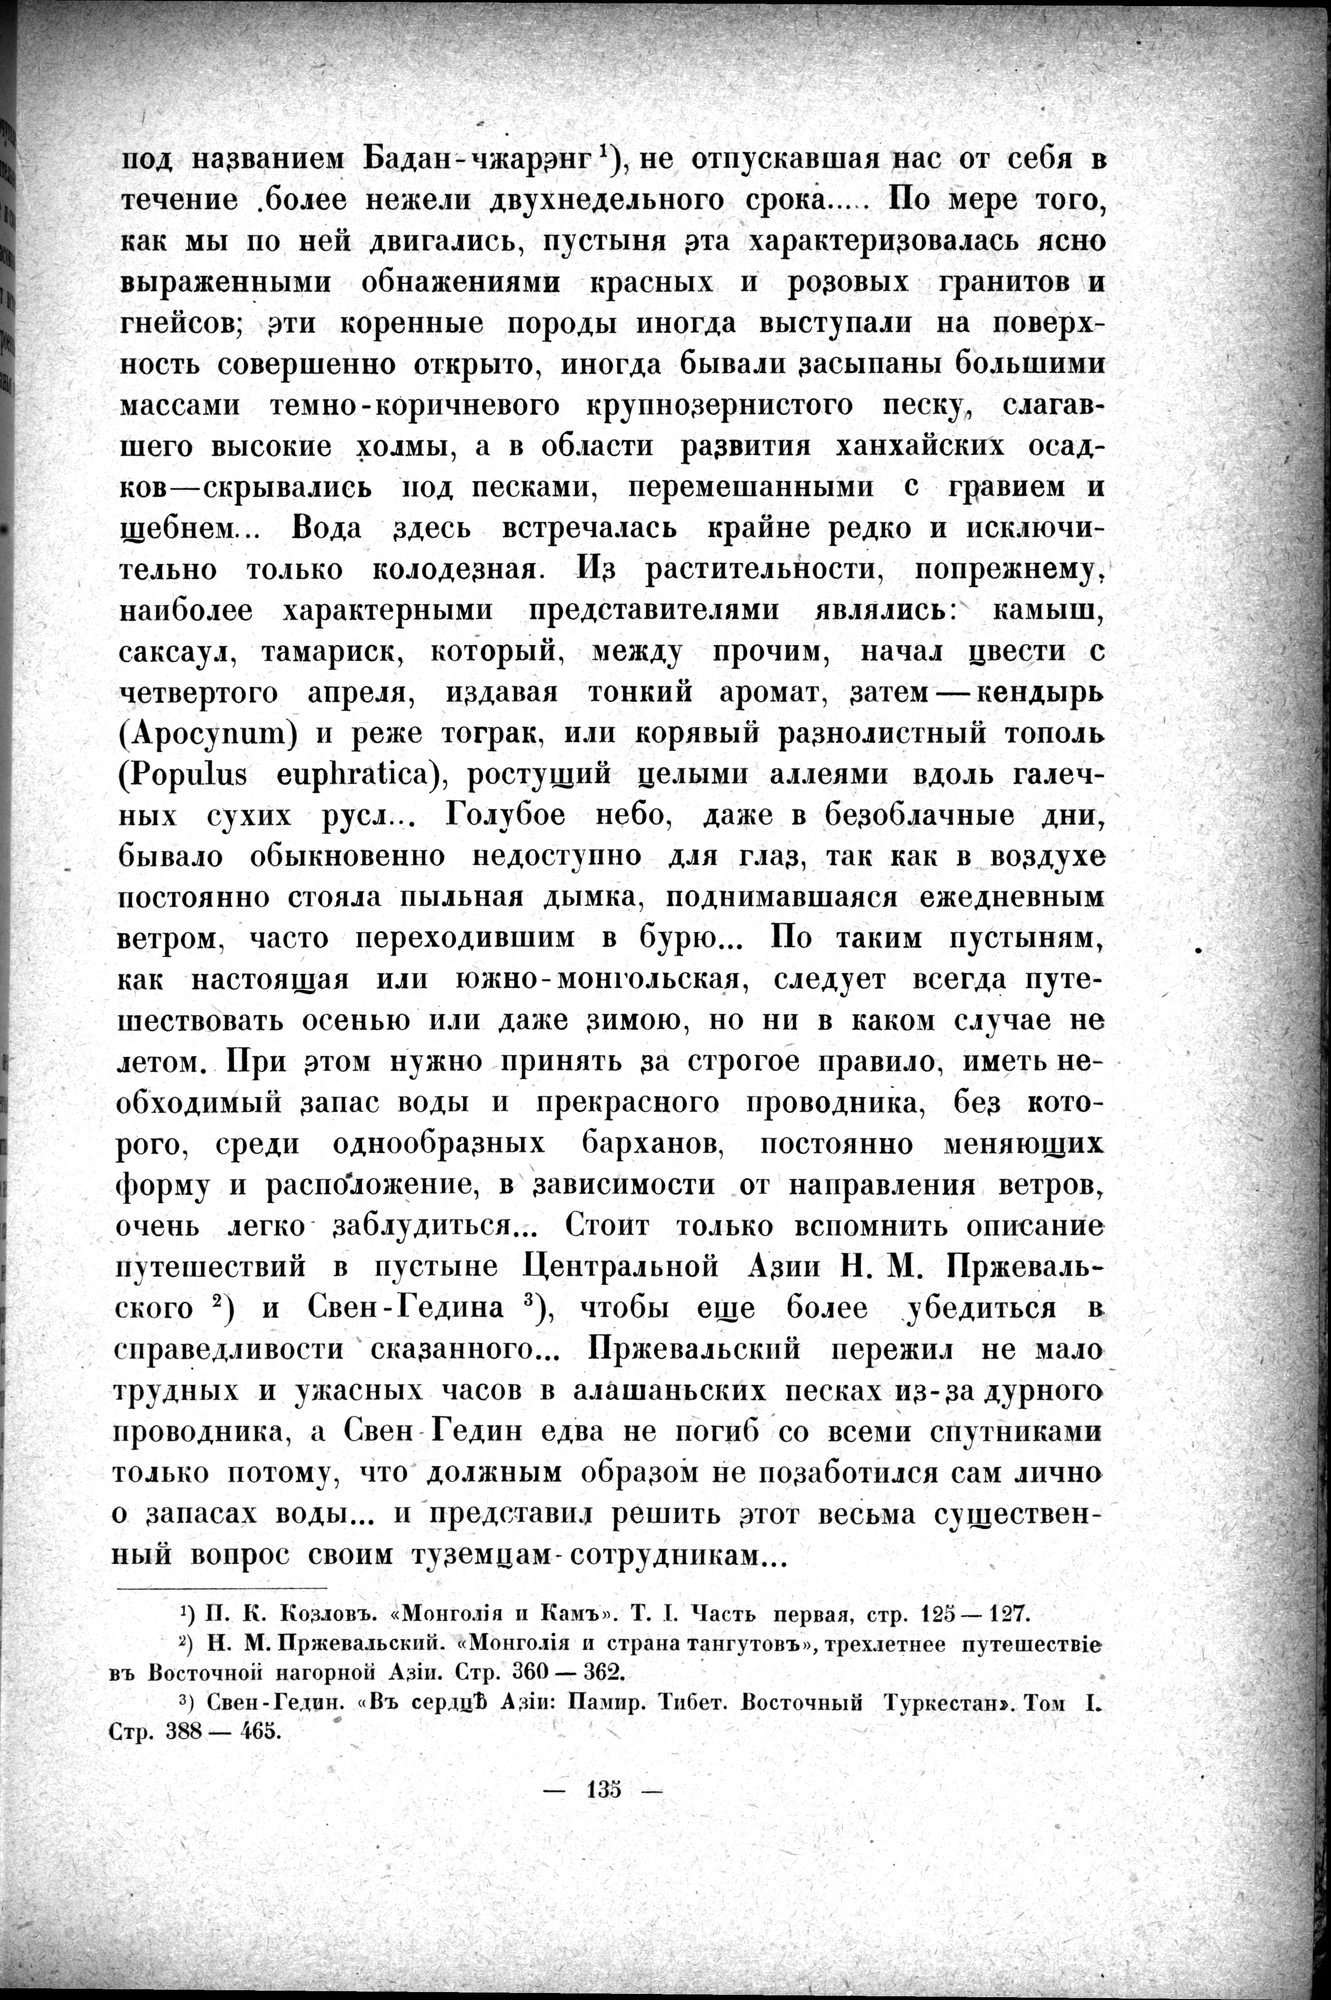 Mongoliya i Amdo i mertby gorod Khara-Khoto : vol.1 / Page 163 (Grayscale High Resolution Image)